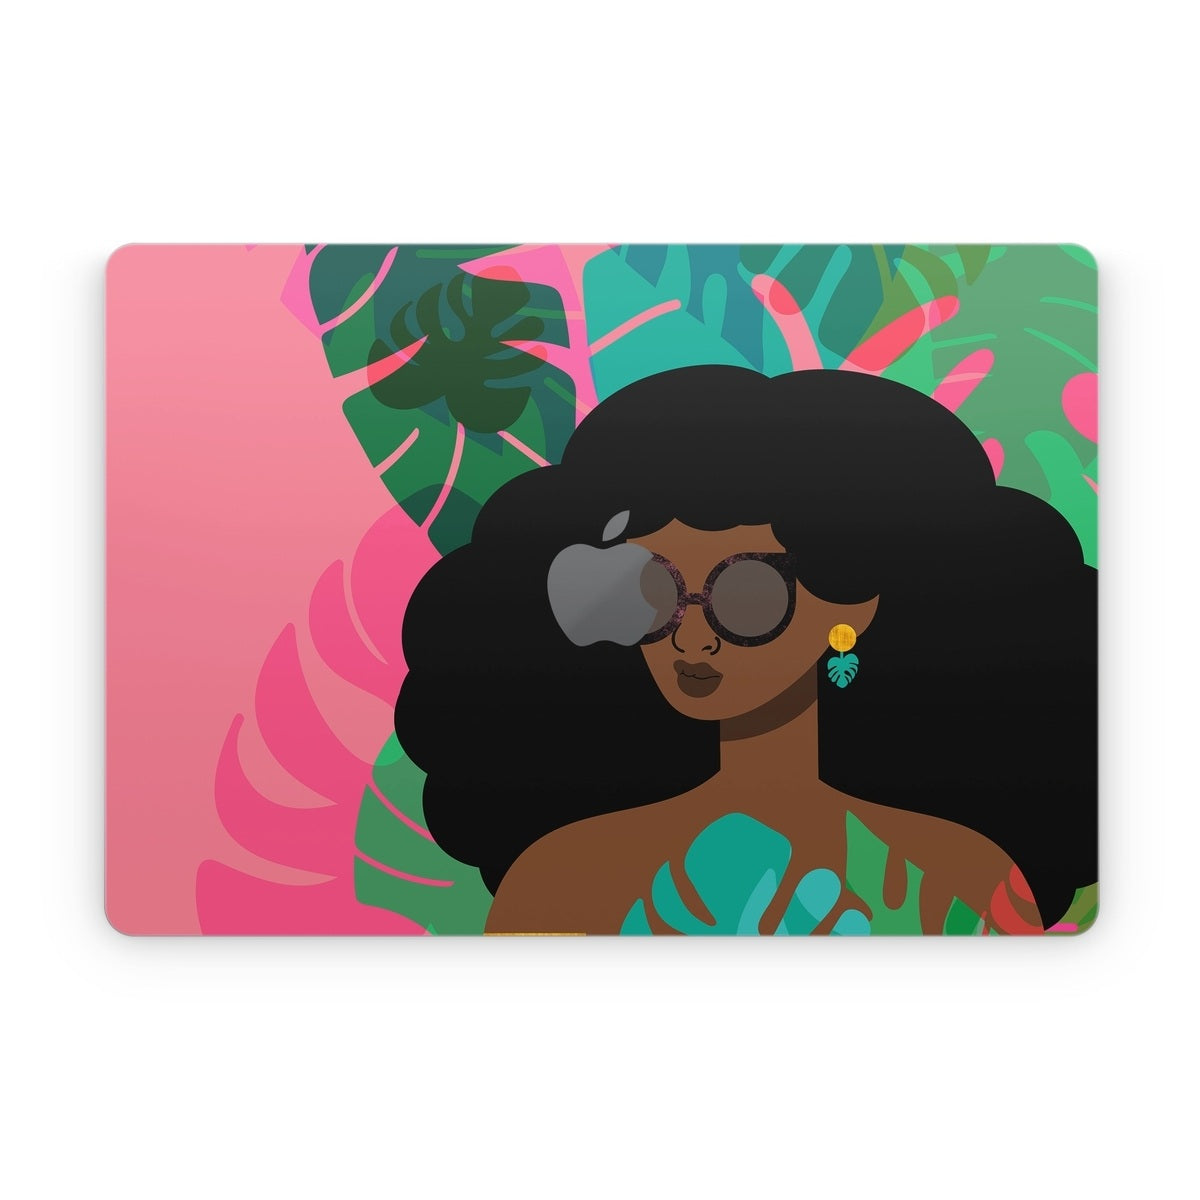 Eva's Garden - Apple MacBook Skin